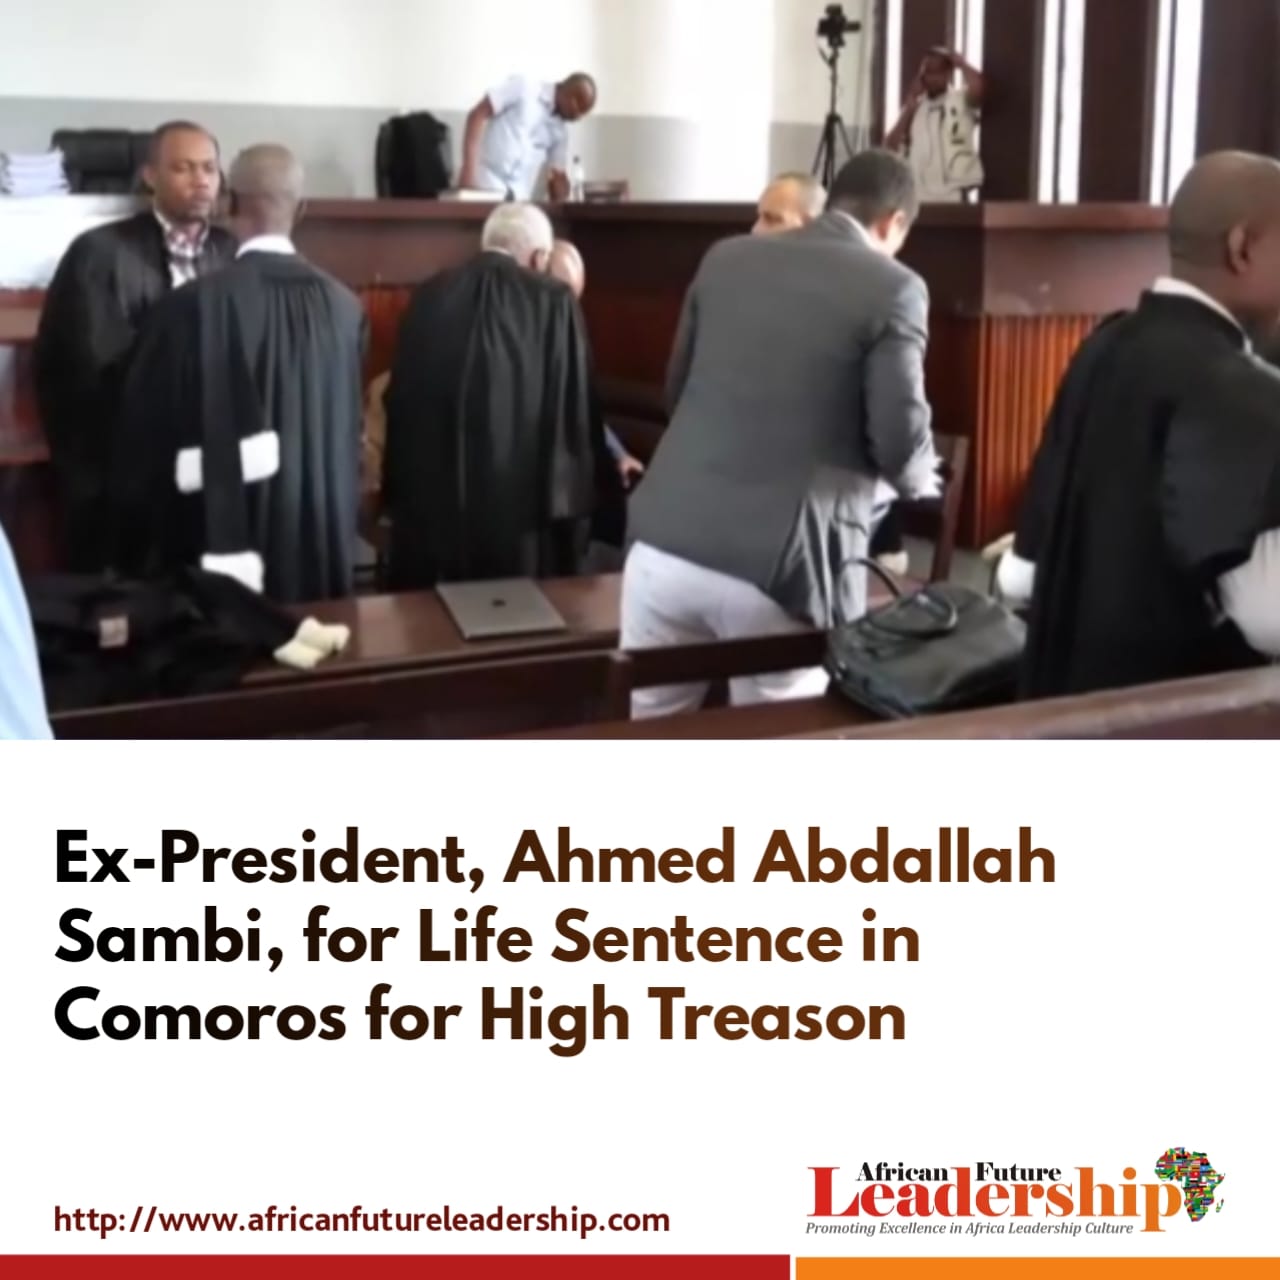 Ex-President, Ahmed Abdallah Sambi, for Life Sentence in Comoros for High Treason